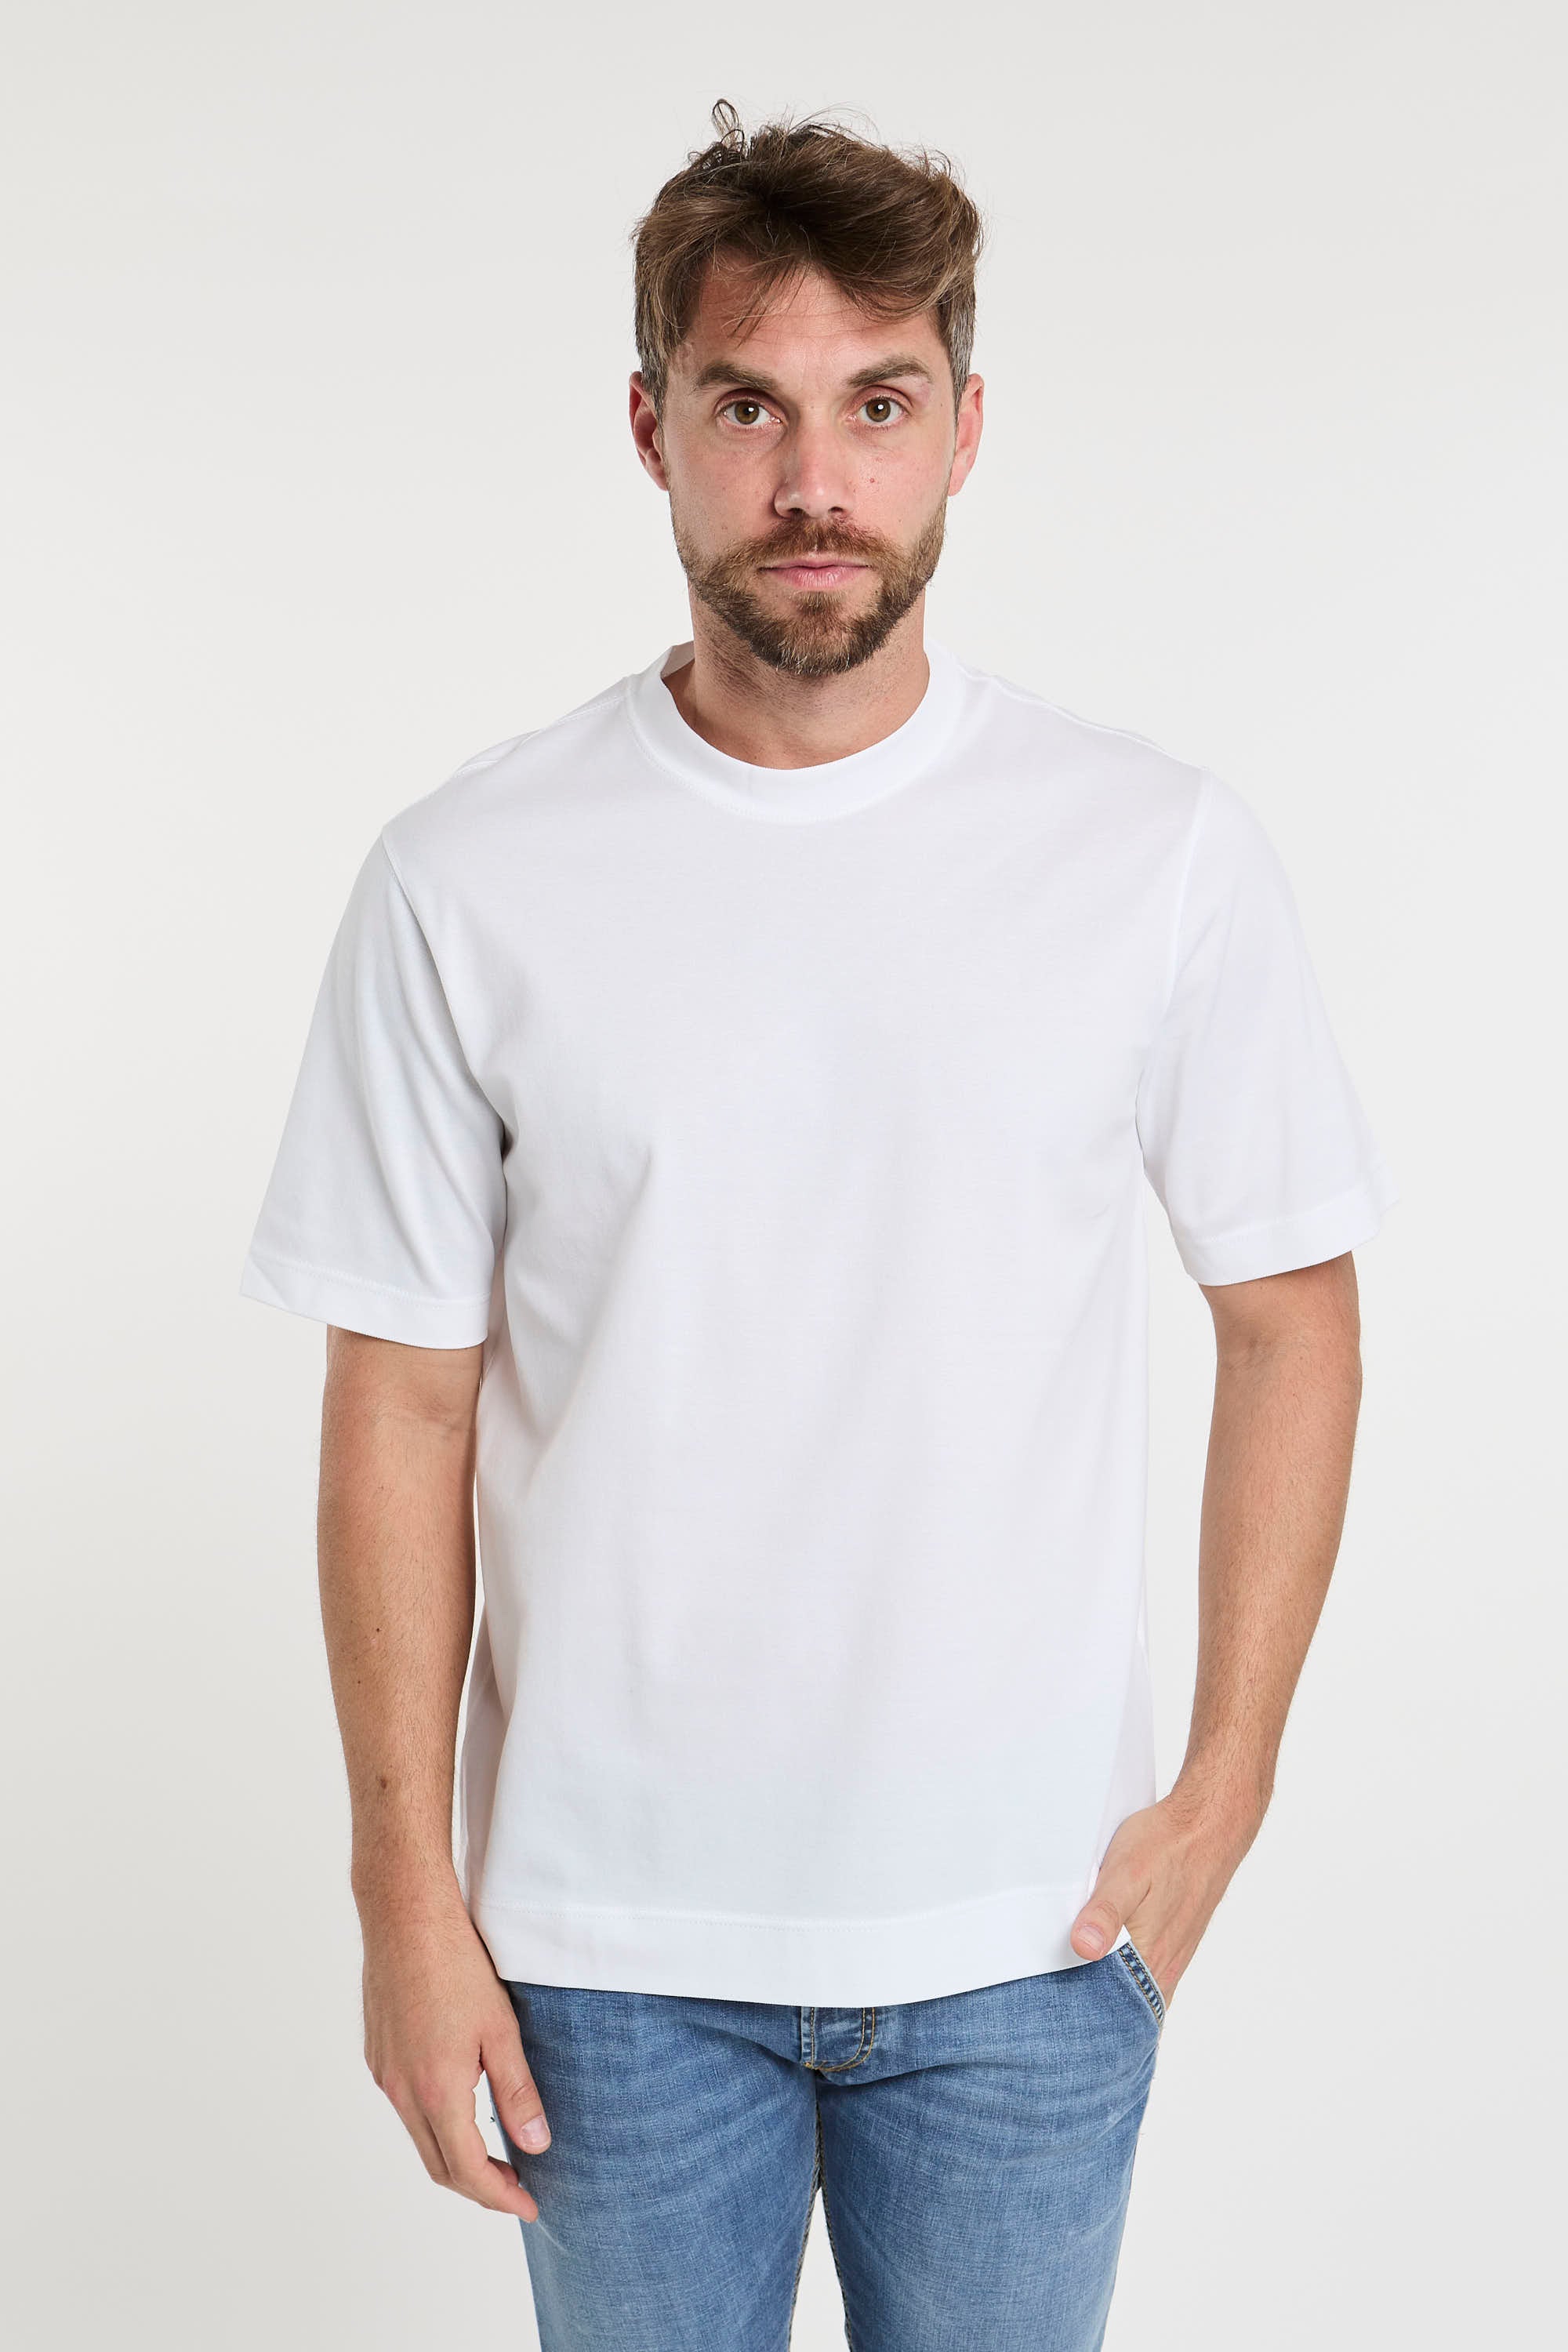 Circolo 1901 T-Shirt Cotton White 6505-4